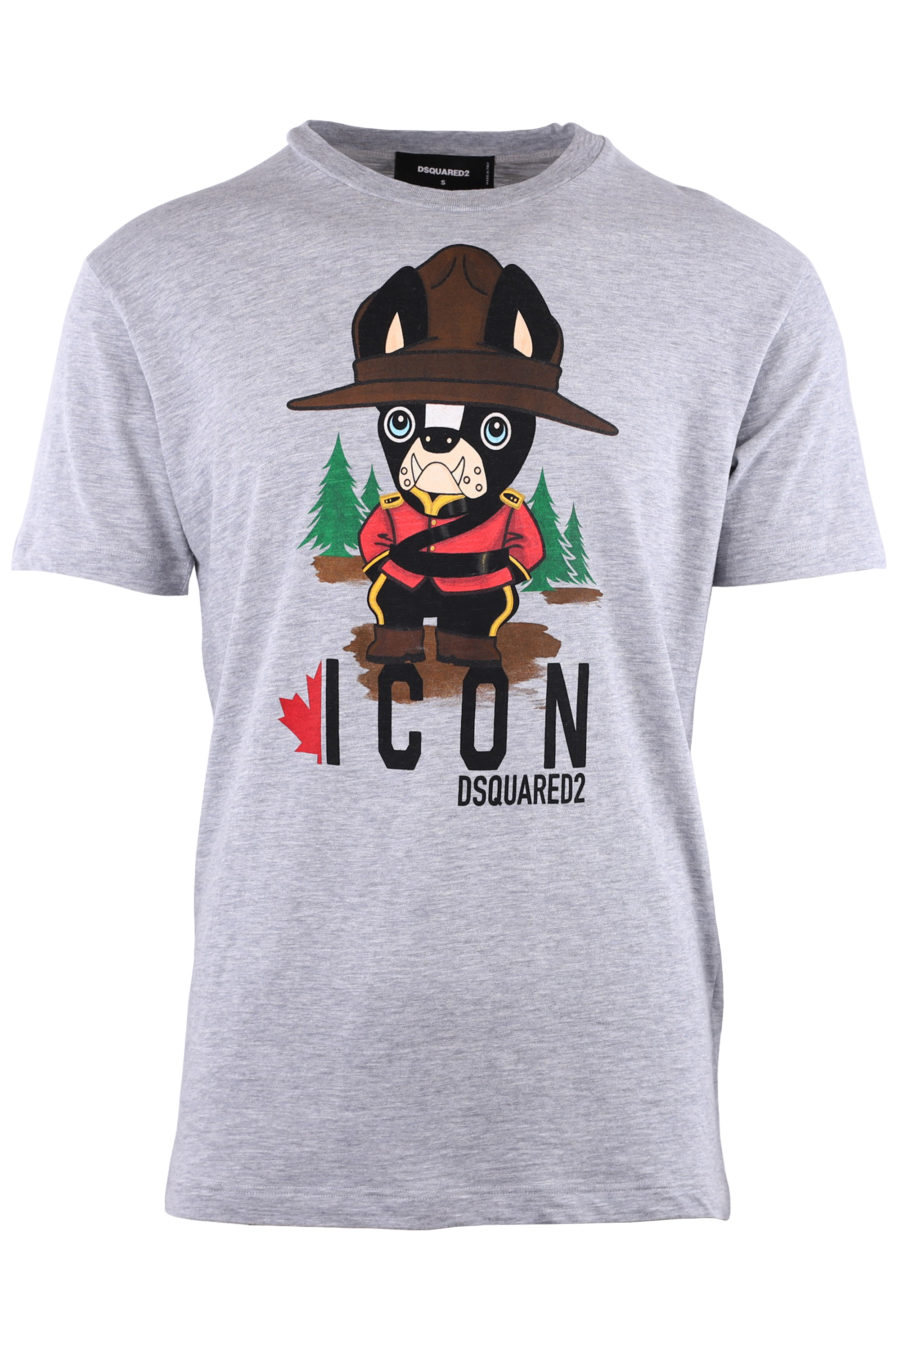 Graues T-Shirt mit Logo und Hundedruck - f8b2bac5fbb84ce37369b60224d8e5e3348e49b0